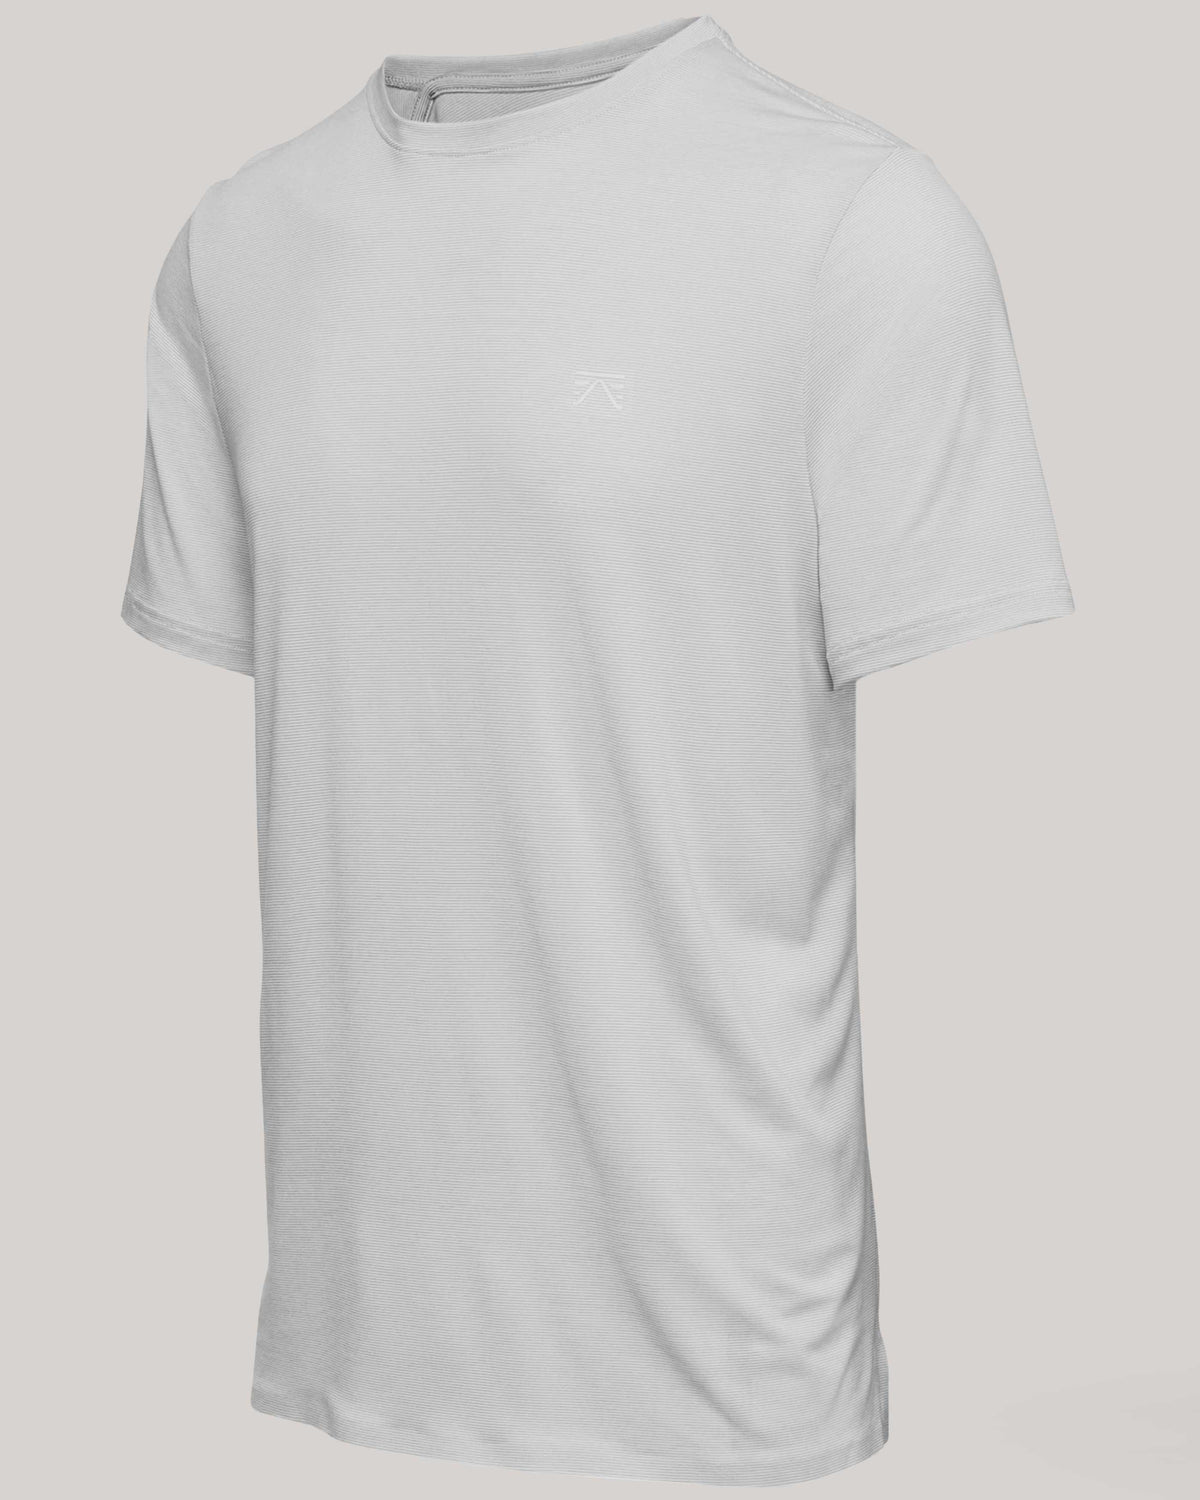 Wear Foehn Men's Cortes Polartec T-Shirt white/alloy / XL